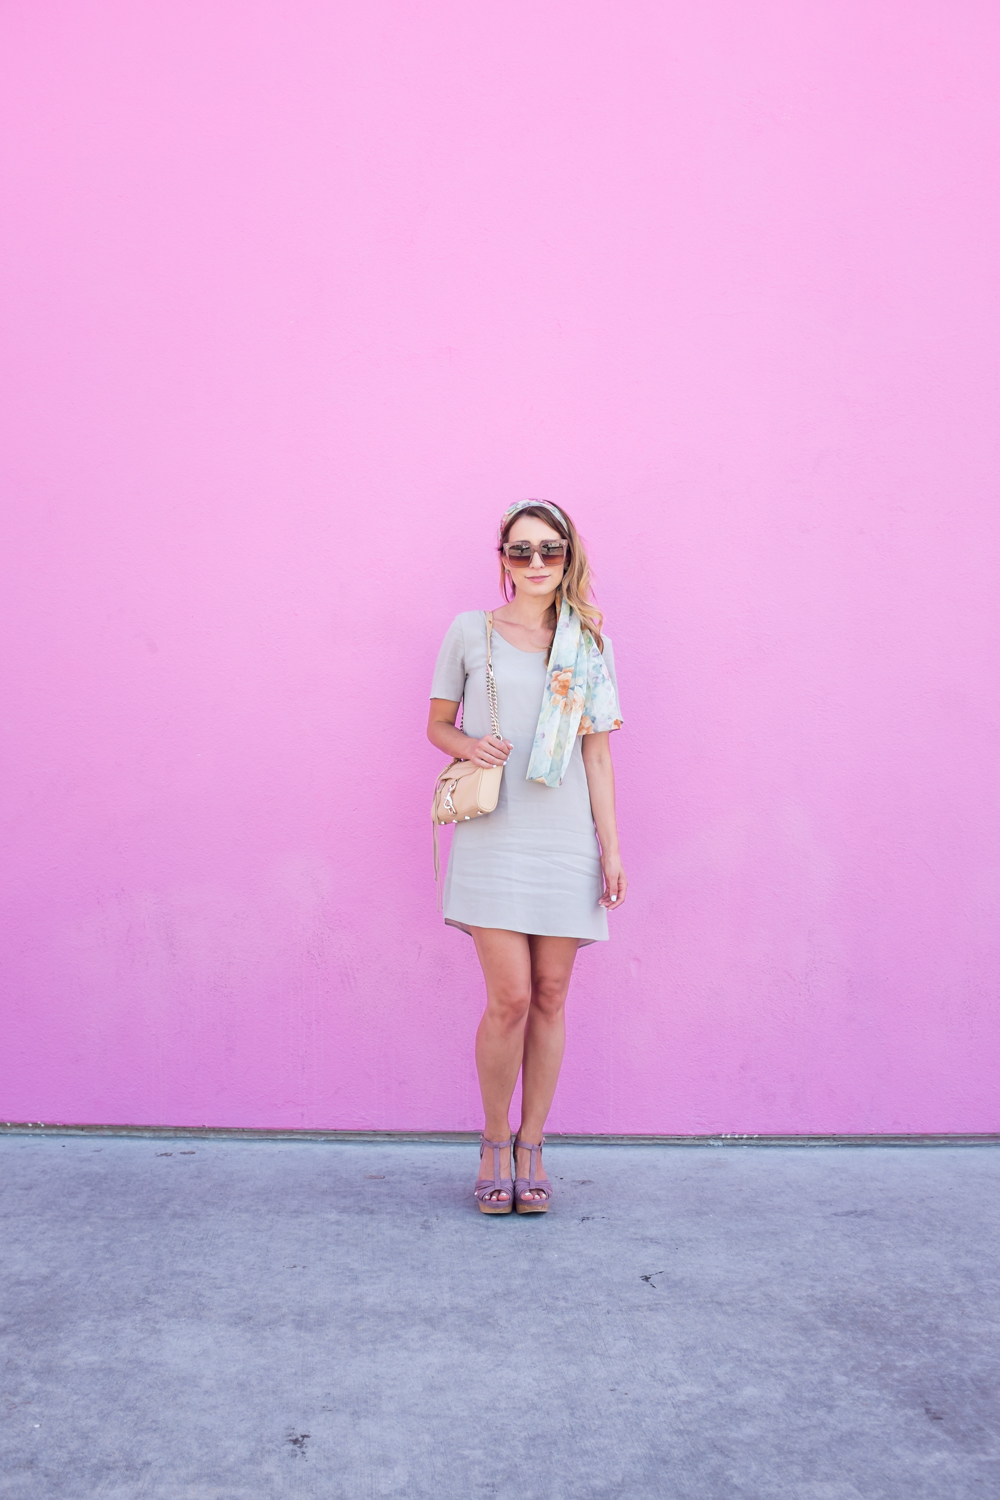 OOTD - Giant Pink Wall | La Petite Noob | A Toronto-Based Fashion and ...